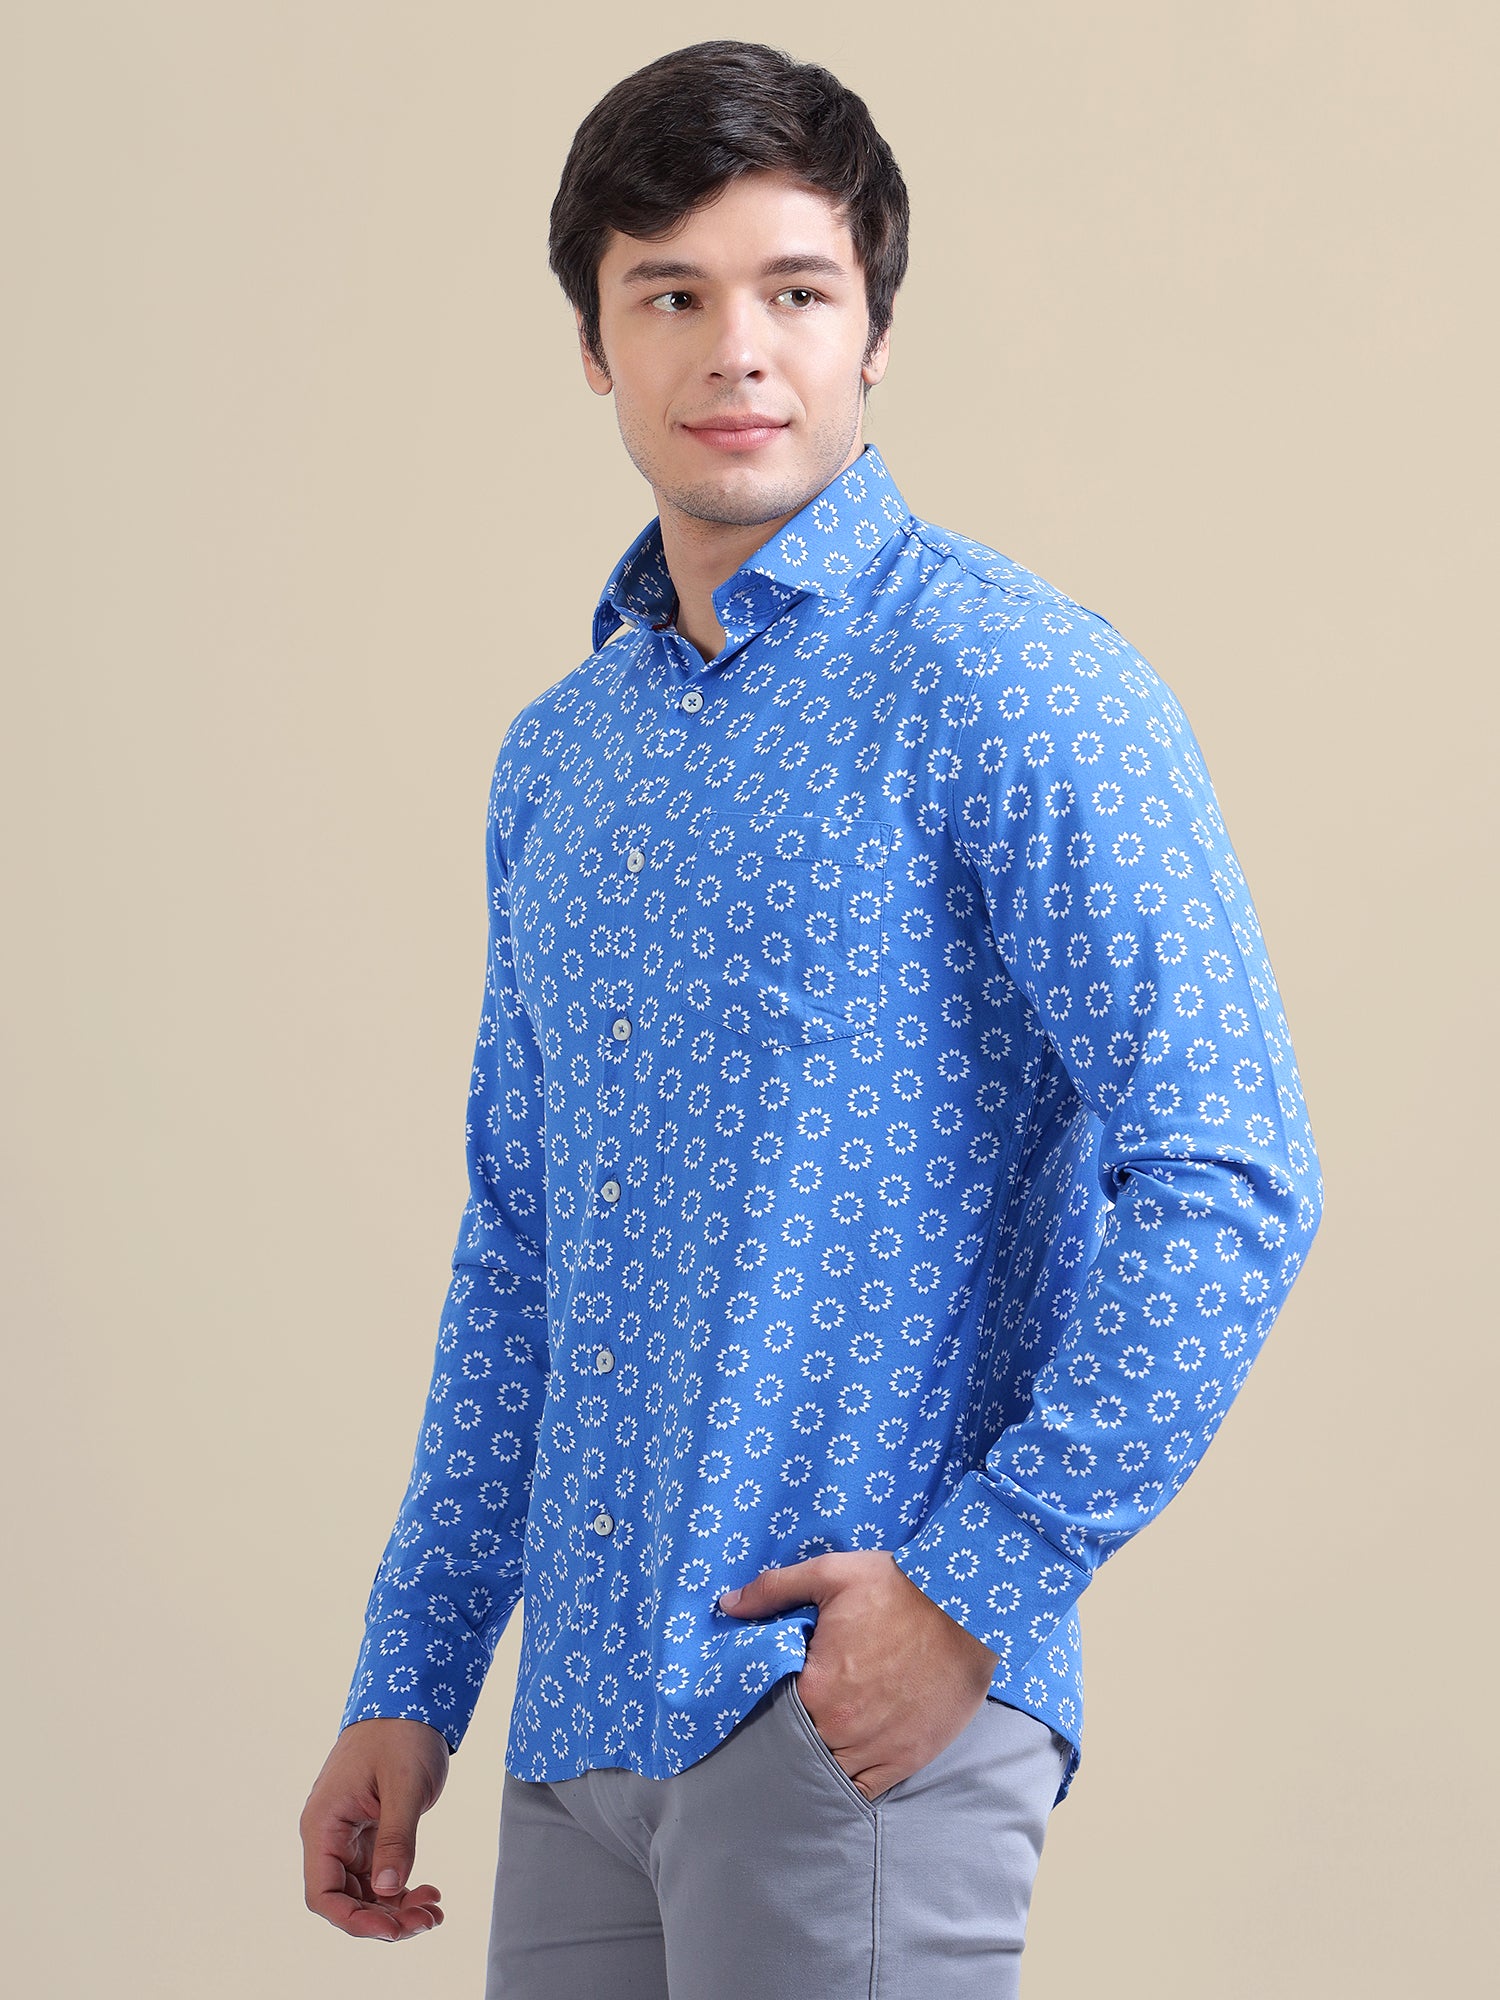 Amswan Men's Premium Rayon Shirt With Blue Block Print